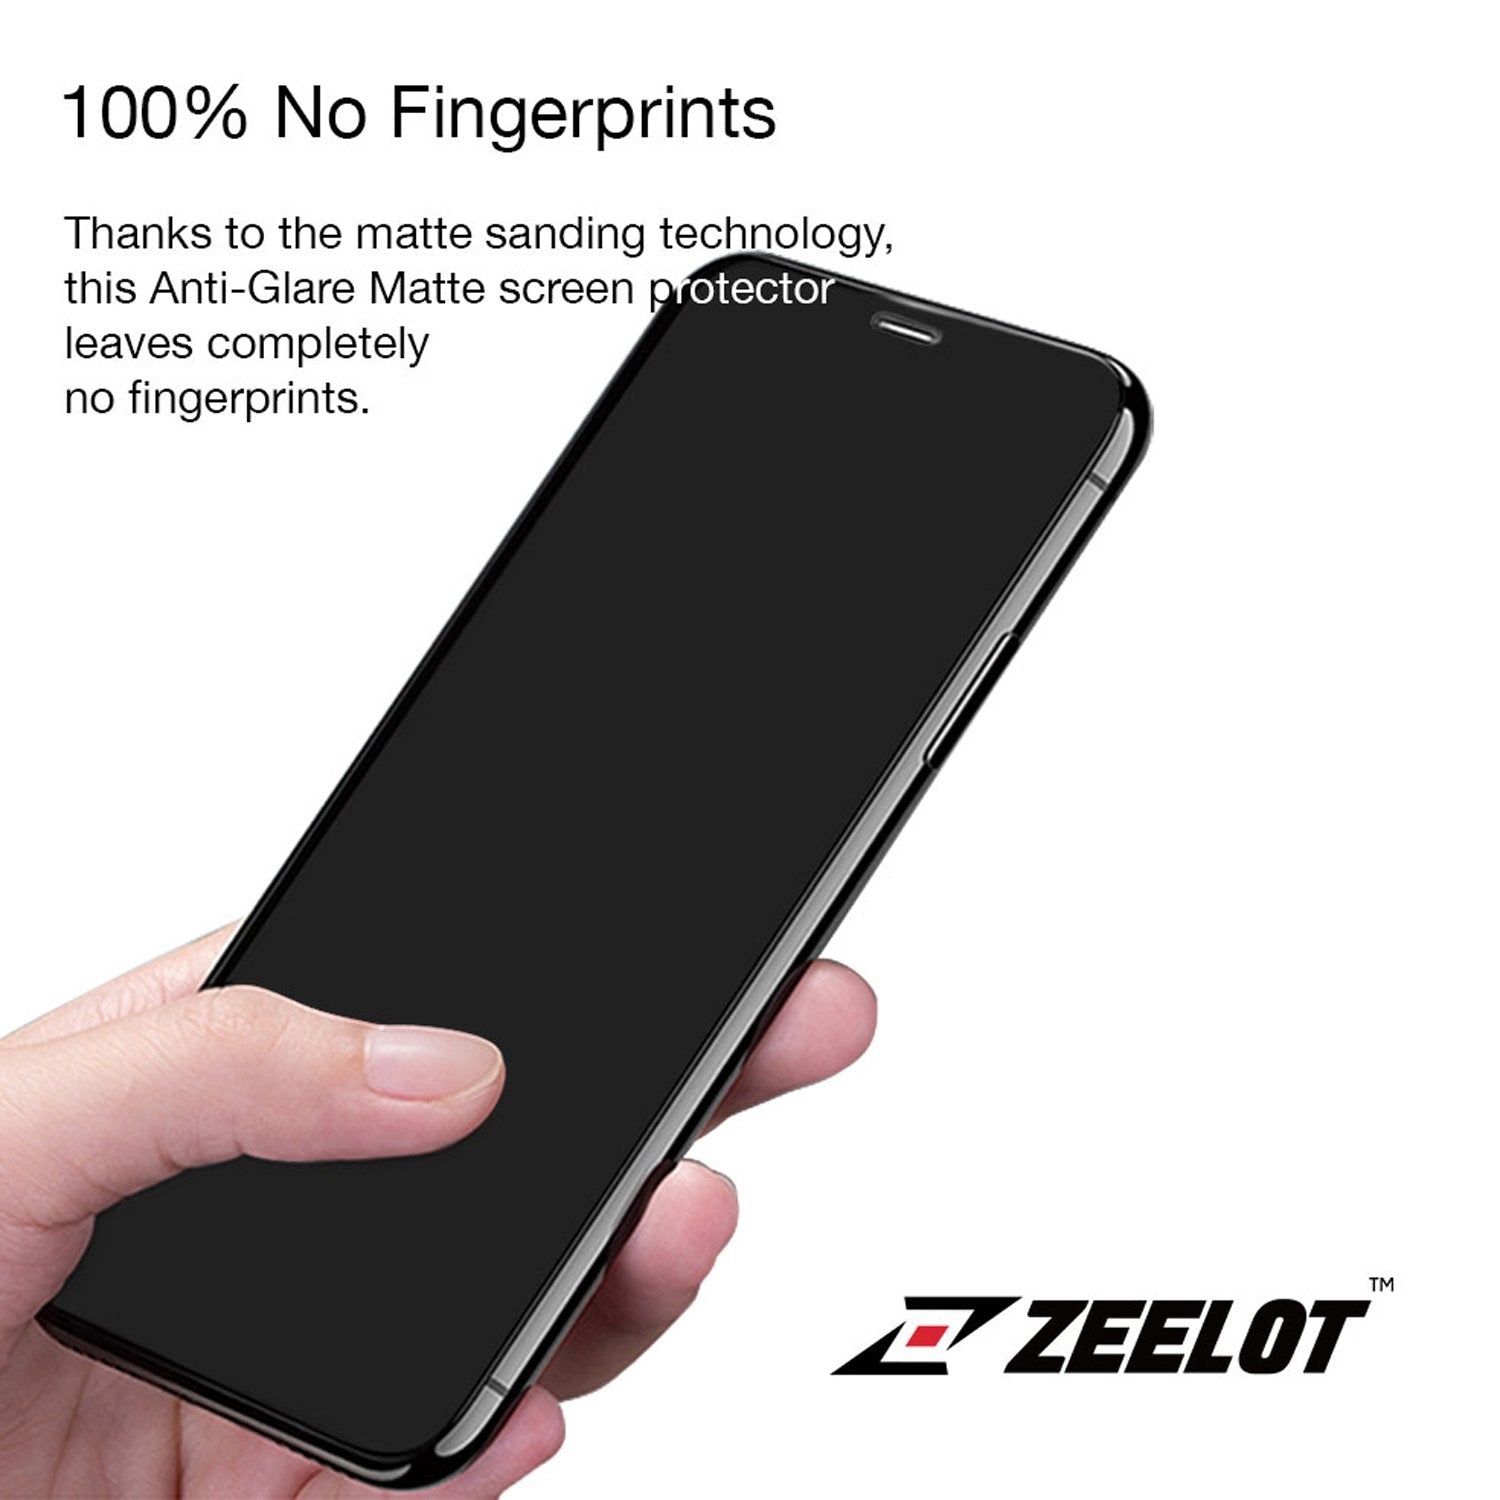 ZEELOT PureGlass 2.5D Tempered Glass Screen Protector for Huawei P30 Lite (2019), Clear Tempered Glass ZEELOT 